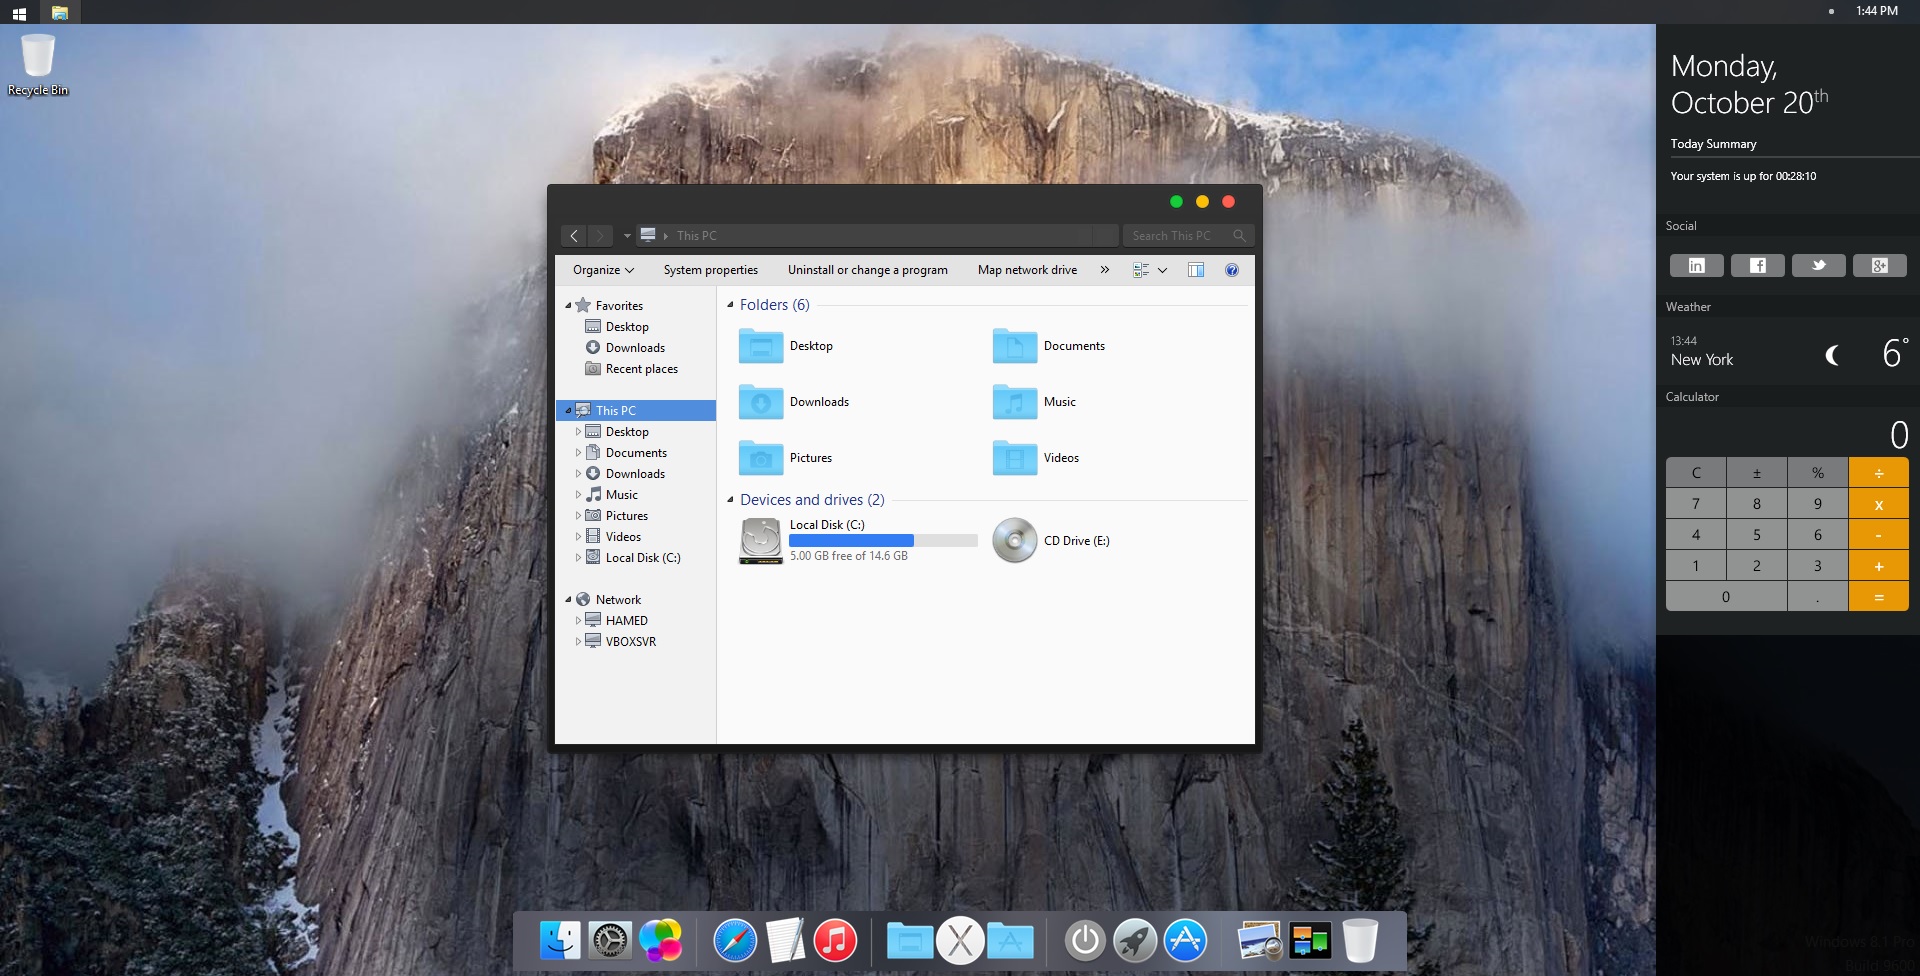 mac osx theme for windows 7